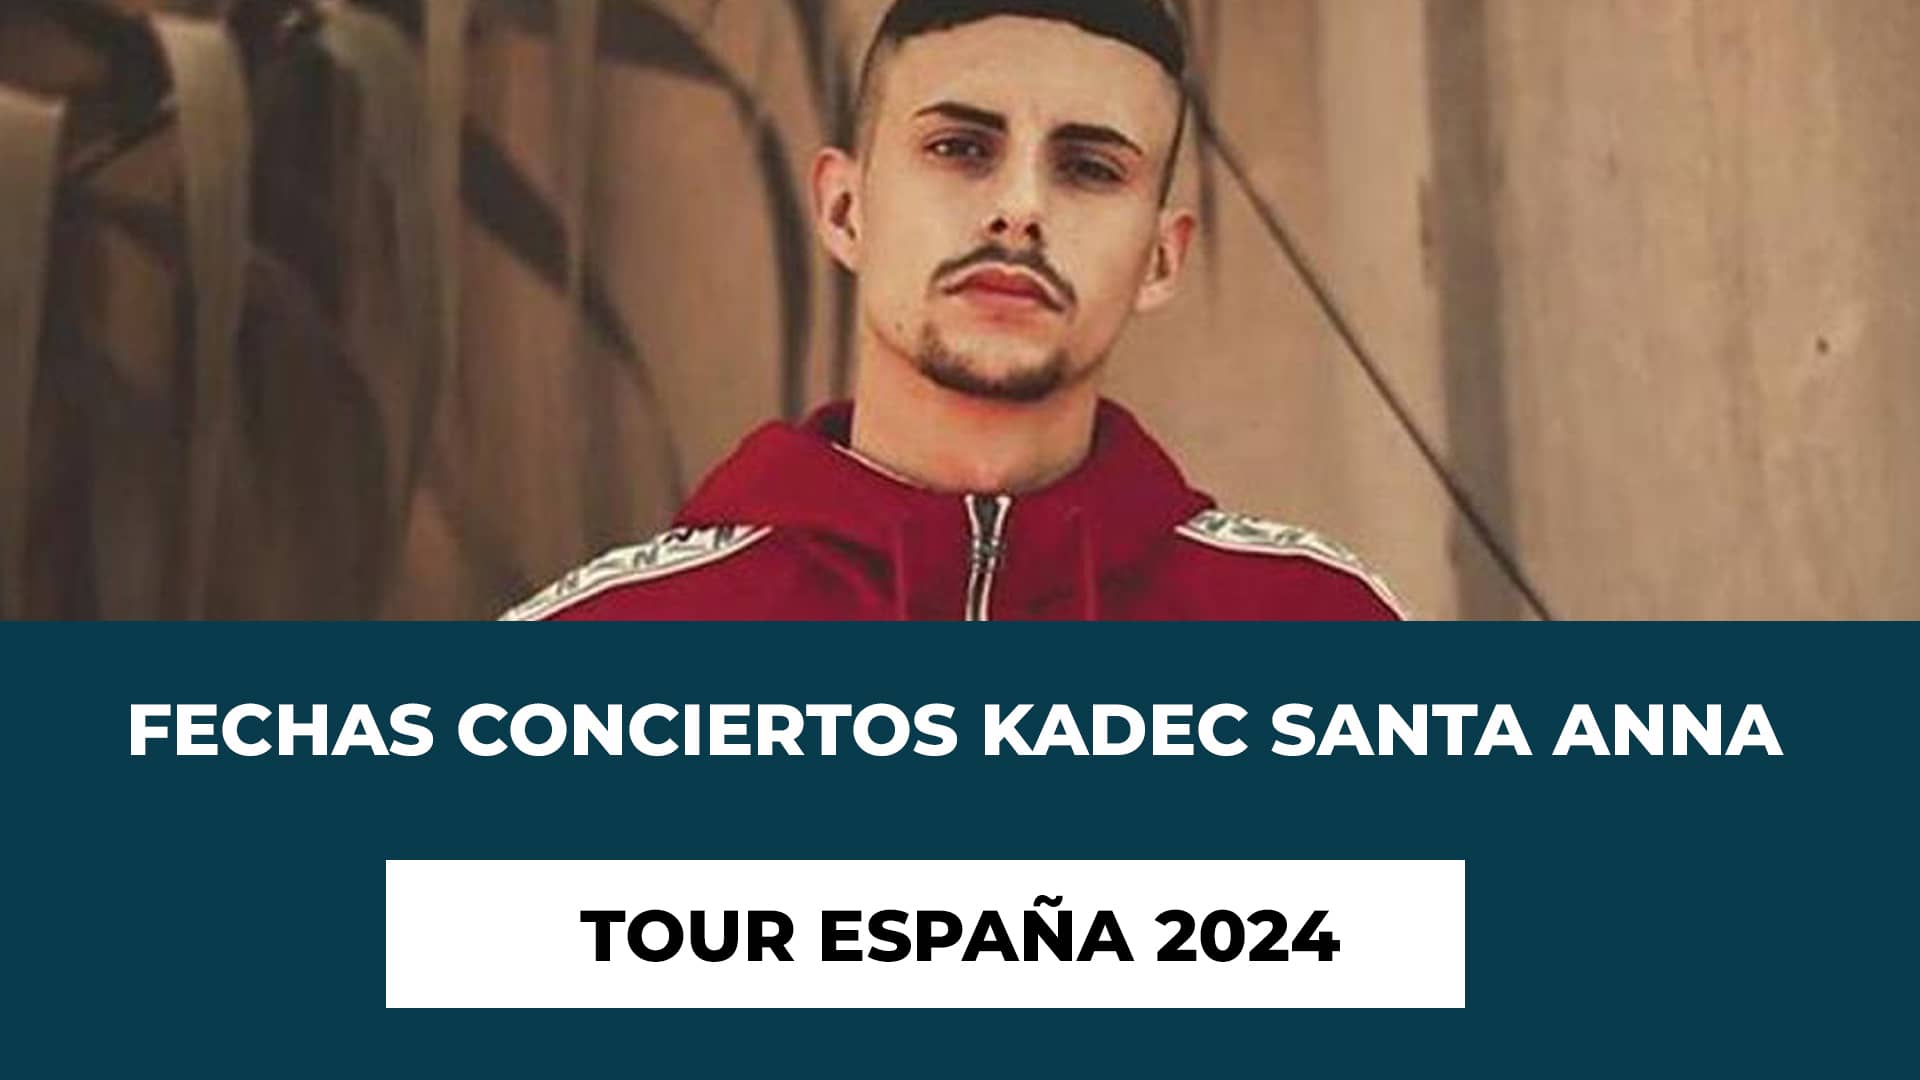 Explora las Fechas Conciertos Kadec Santa Anna Tour España 2024 - Nueva gira de Kadec 24 Tour - fechas de la gira en España - Entradas